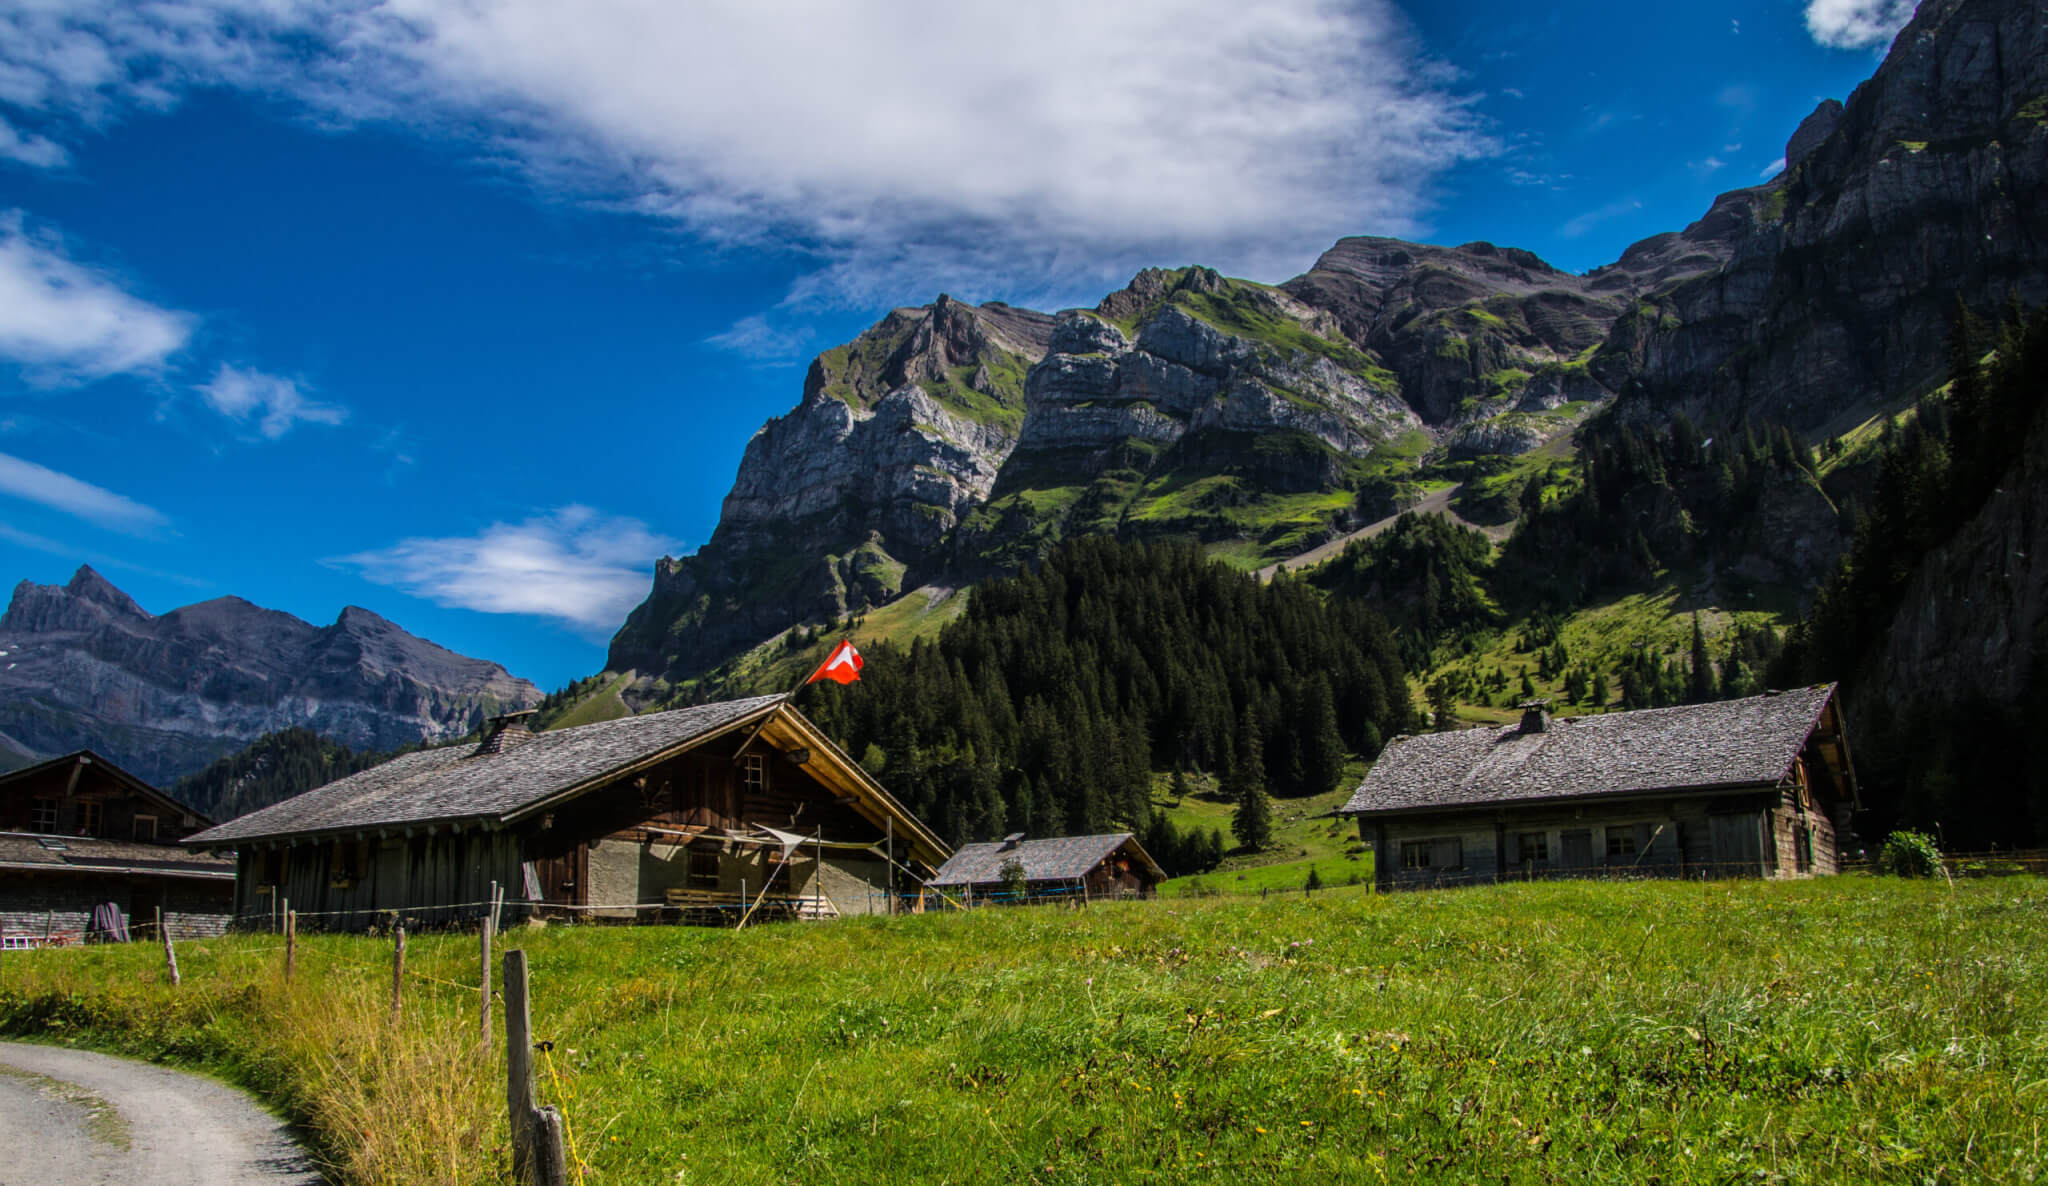 Beautiful rural scene of wooden village houses in Verbier, Switzerland